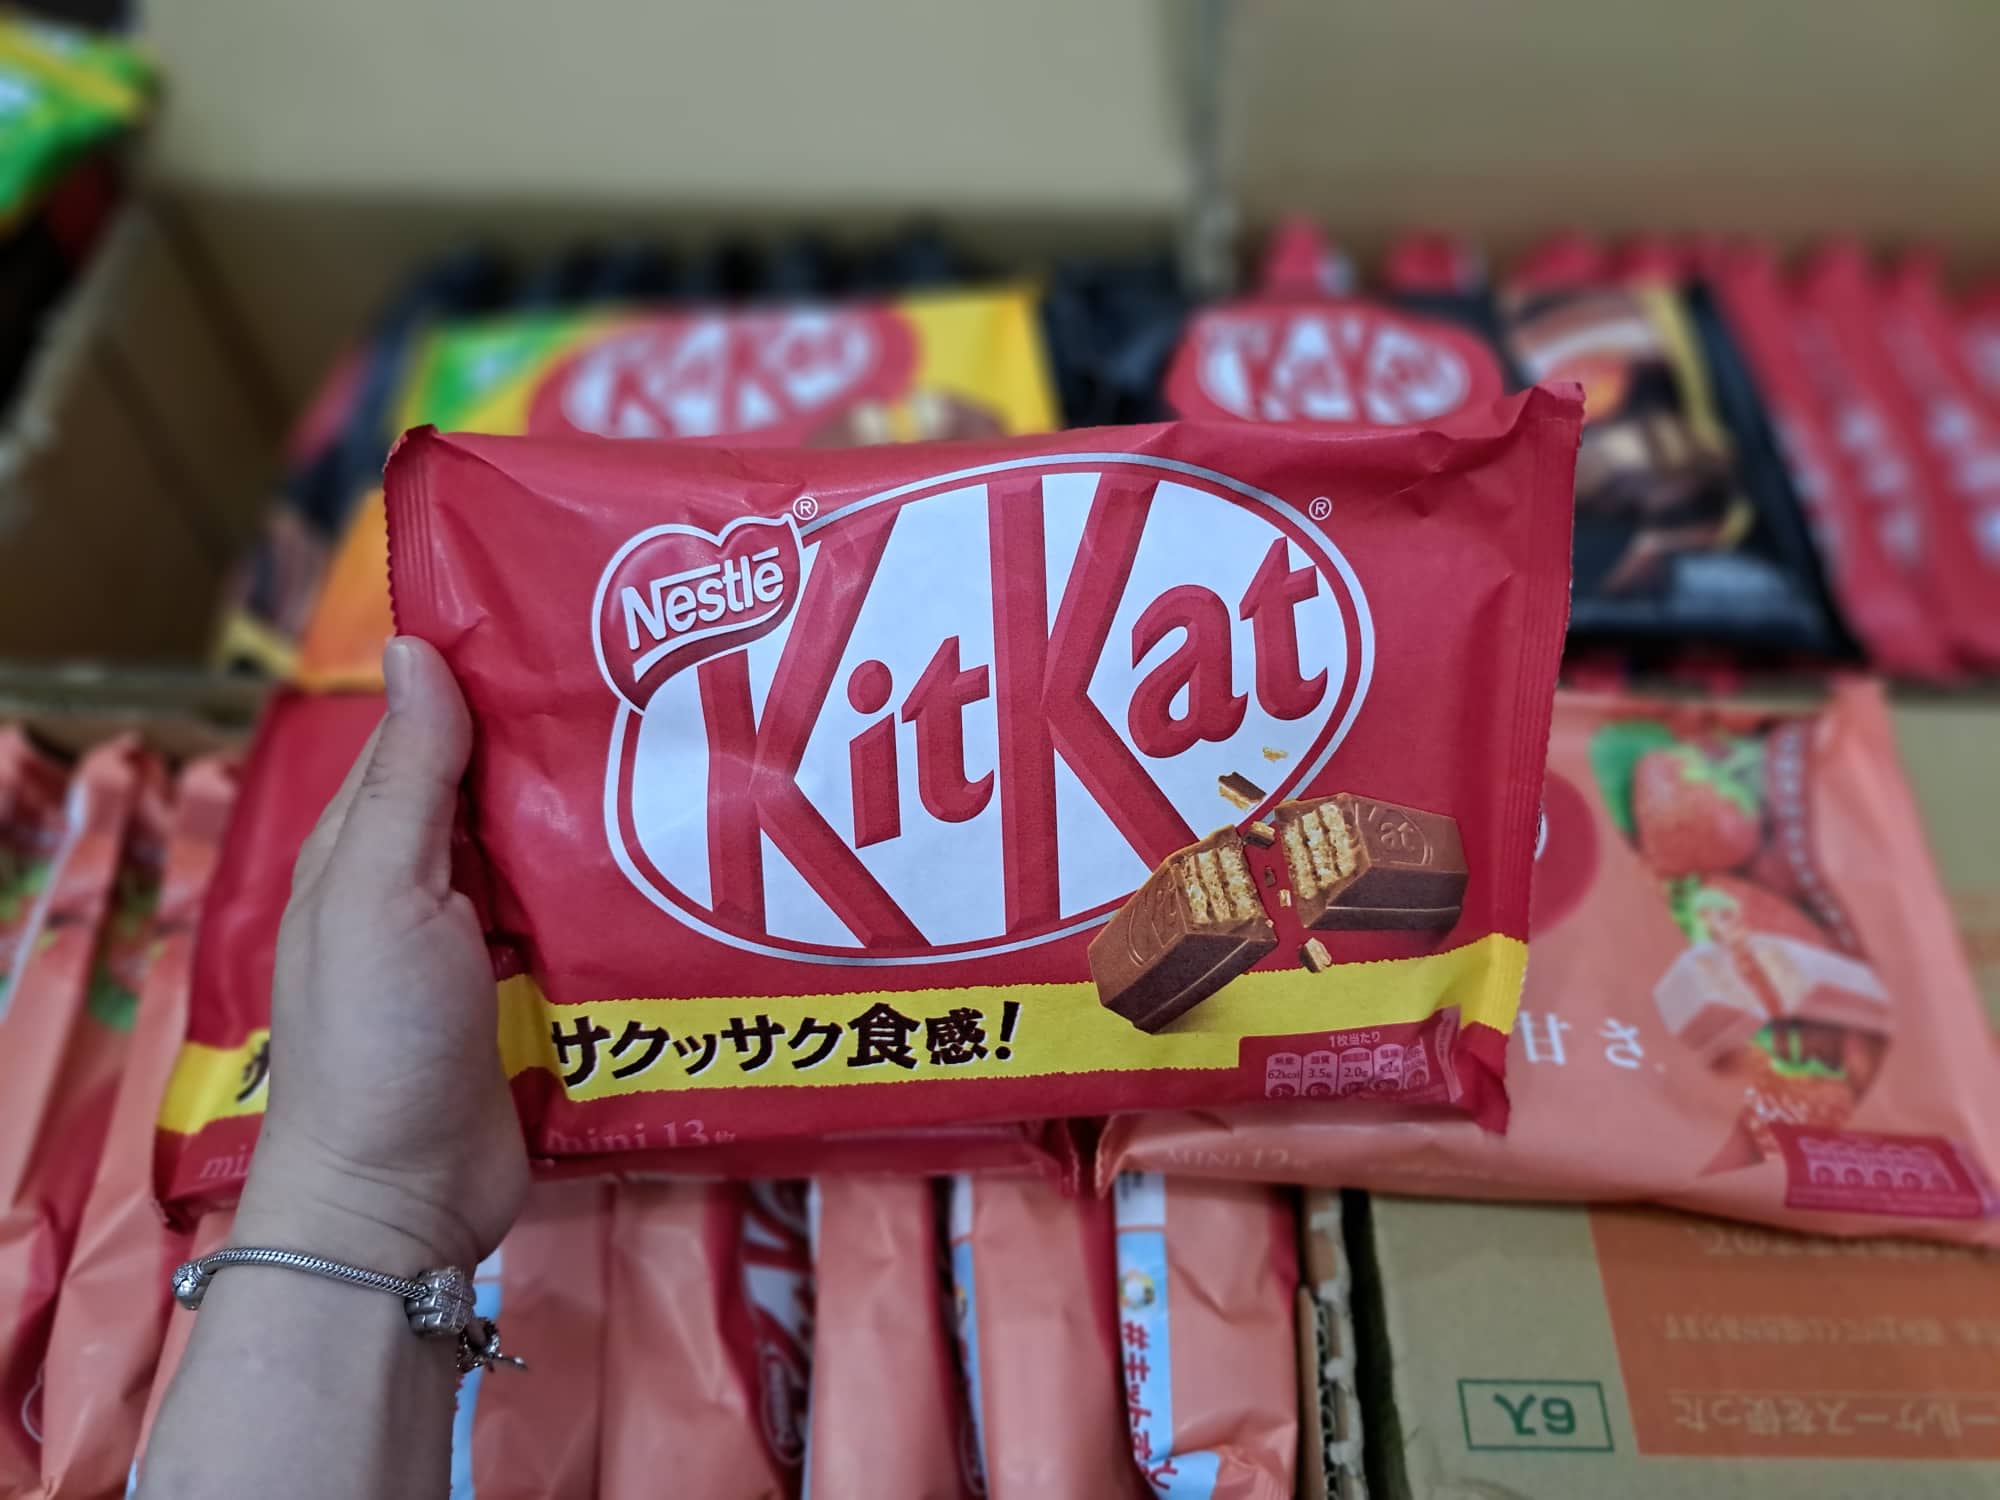 Kitkat Nhật